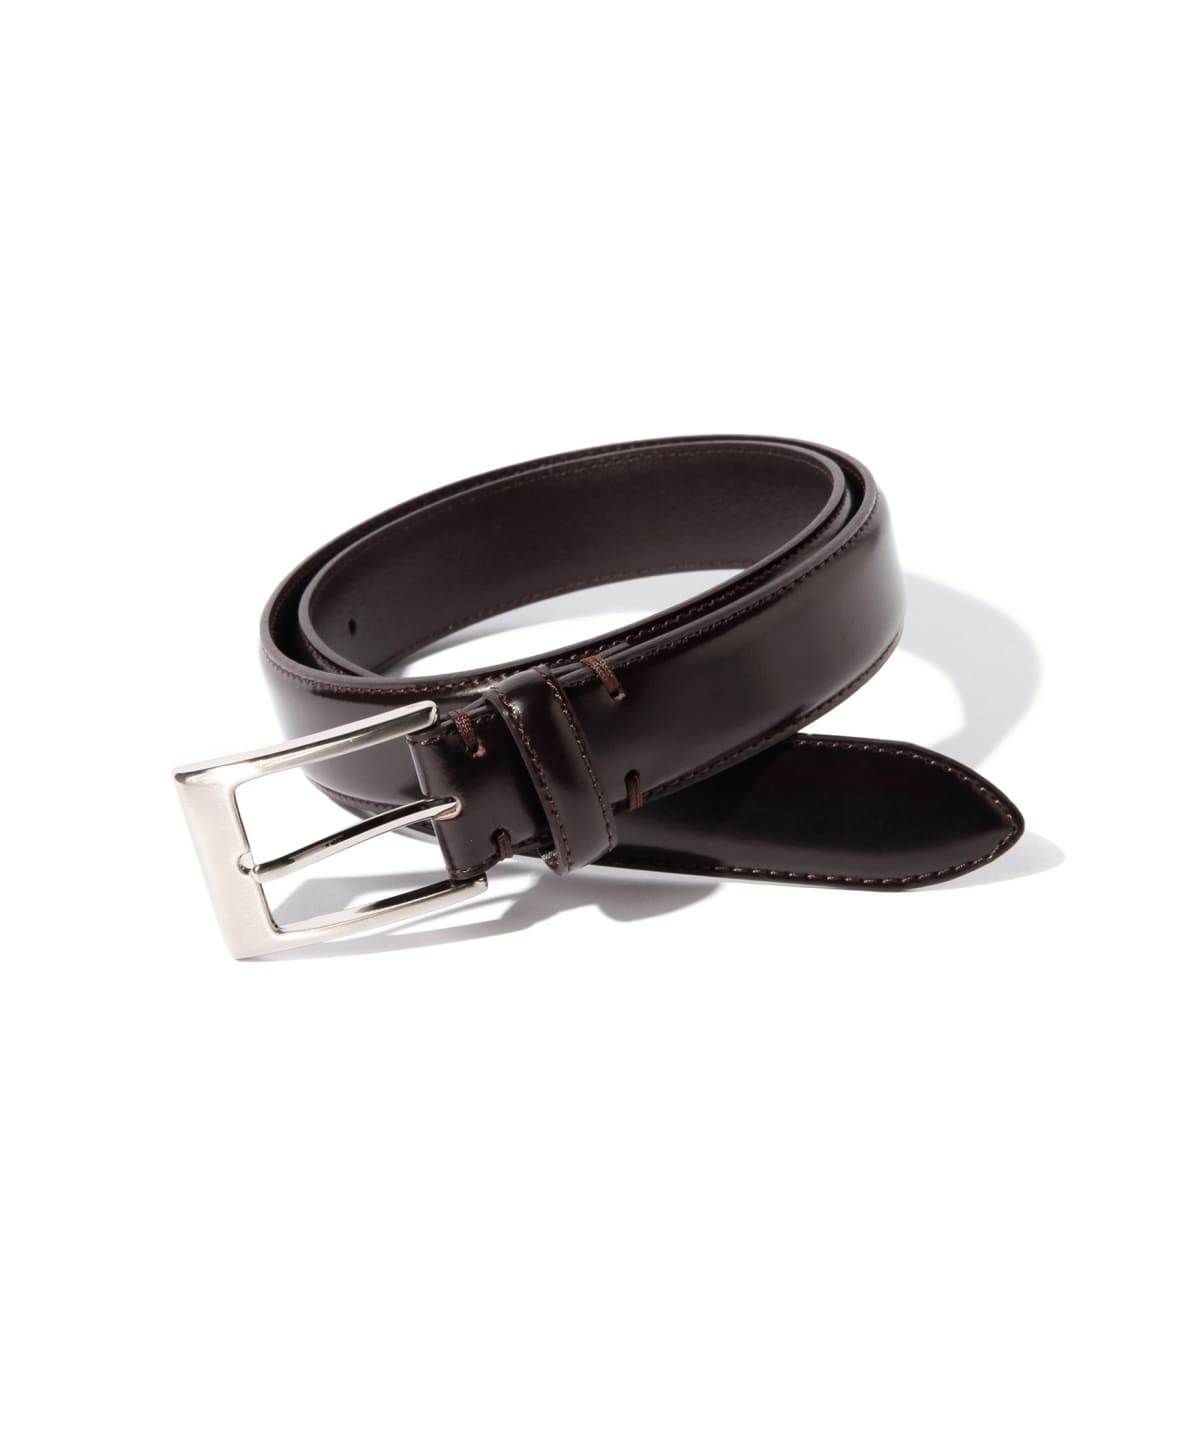 BEAMS BEAMS / Soft glass leather belt (fashion